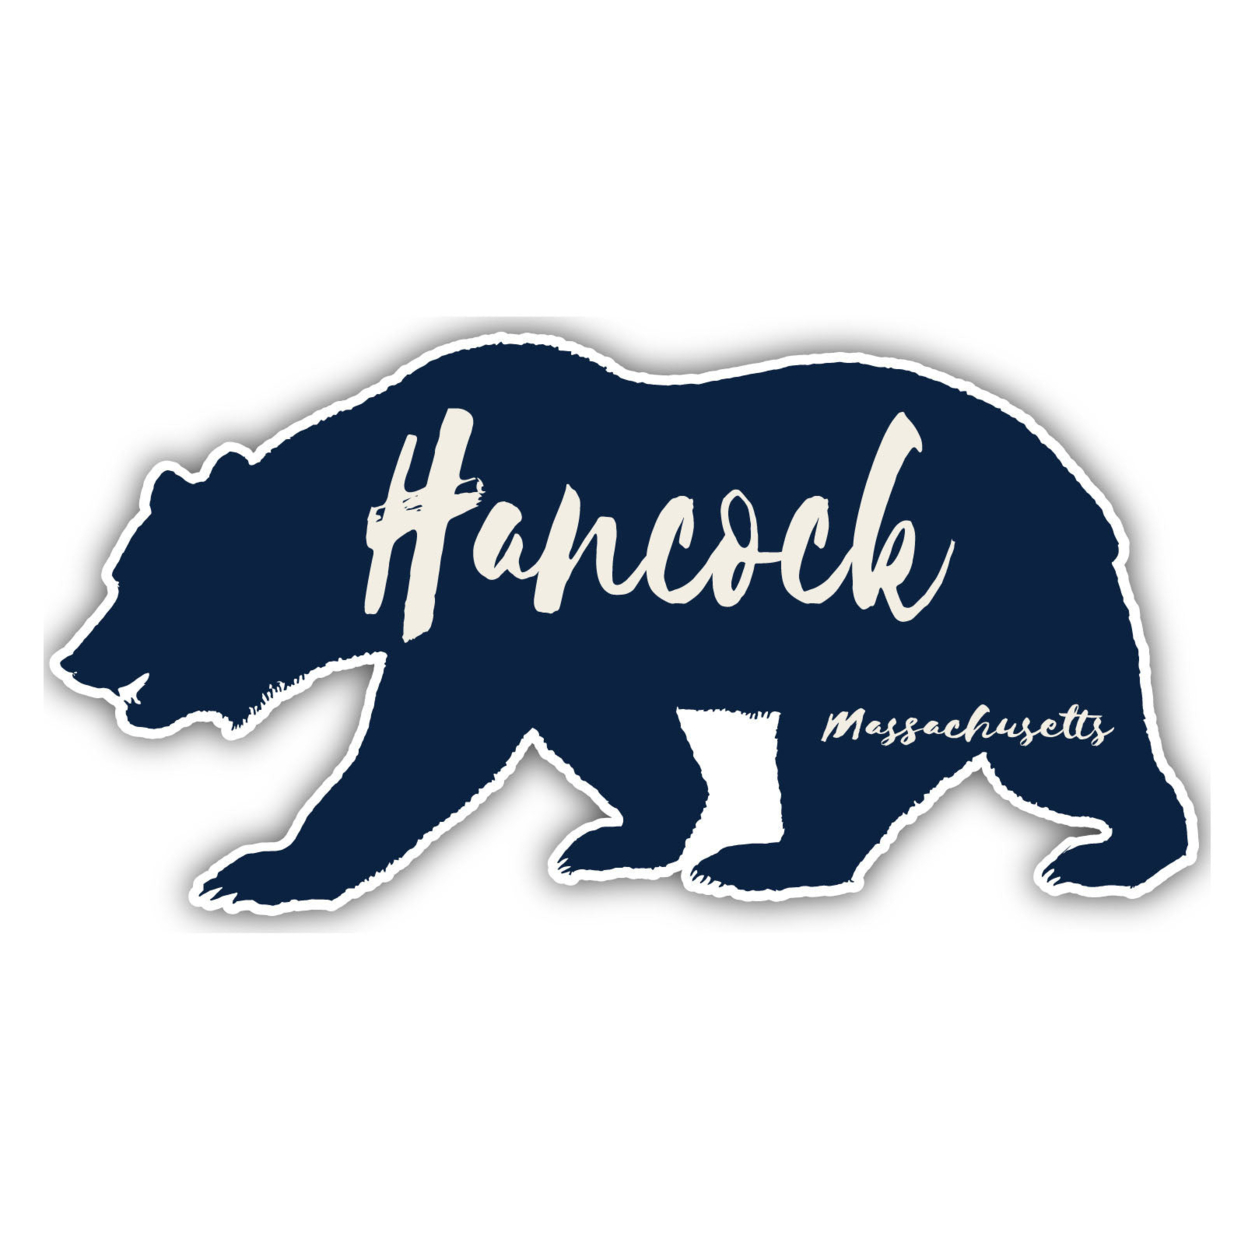 Hancock Massachusetts Souvenir Decorative Stickers (Choose Theme And Size) - 4-Pack, 6-Inch, Tent